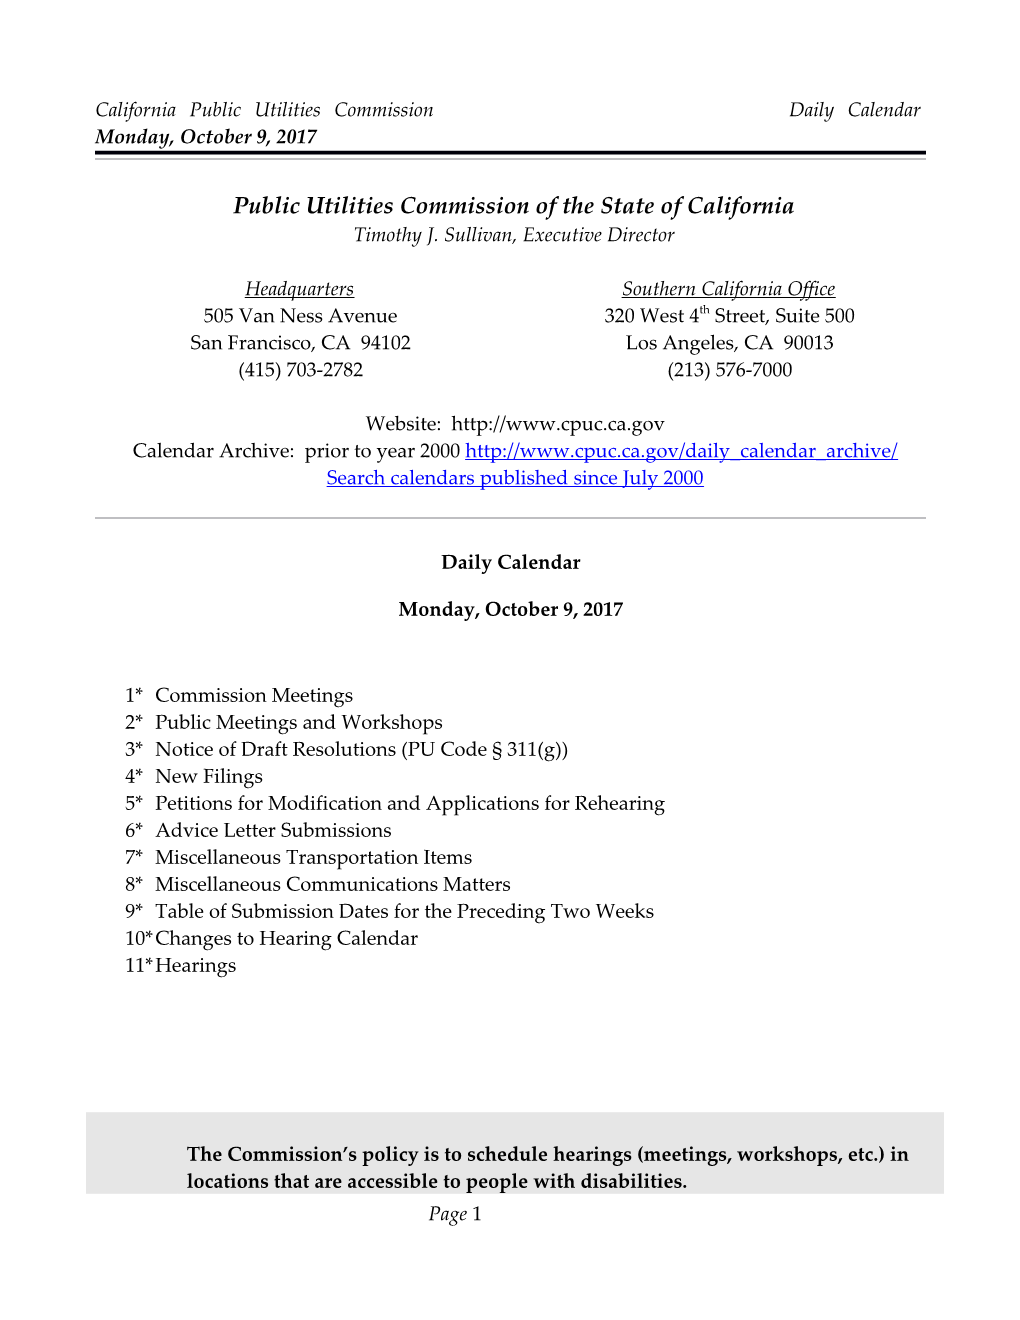 California Public Utilities Commission Daily Calendar Monday, October 9, 2017